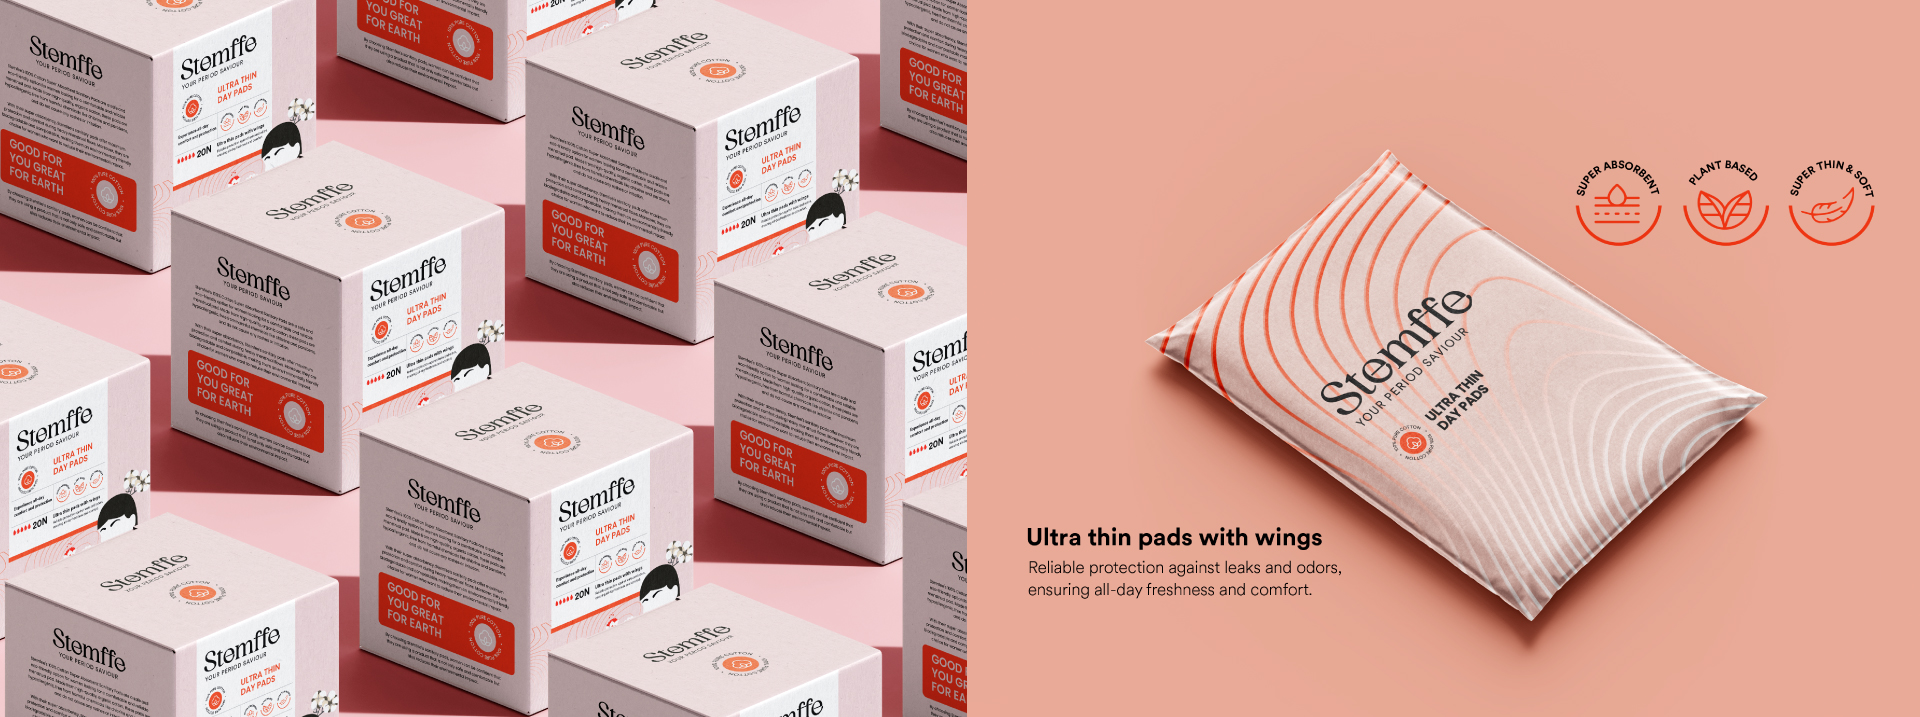 "Stemffe - A feminine hygiene brand, featuring elegant branding and packaging design by Devolv Studio.